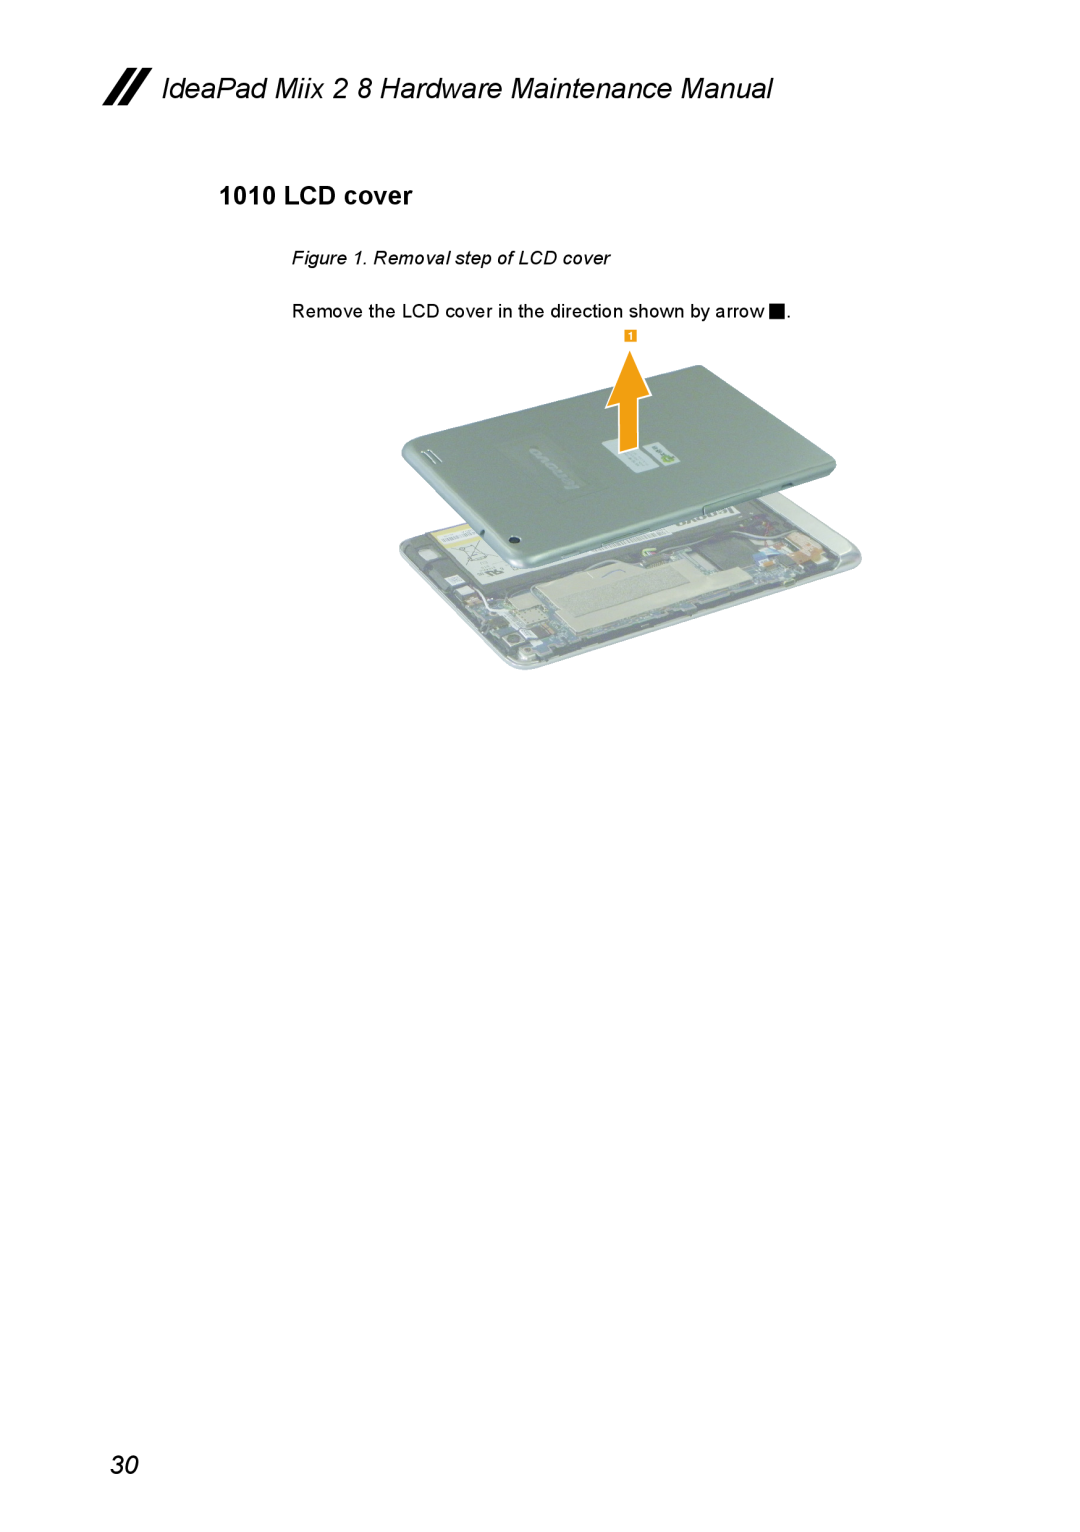 Lenovo MIIX 2 8 manual Removal step of LCD cover, IdeaPad Miix 2 8 Hardware Maintenance Manual 